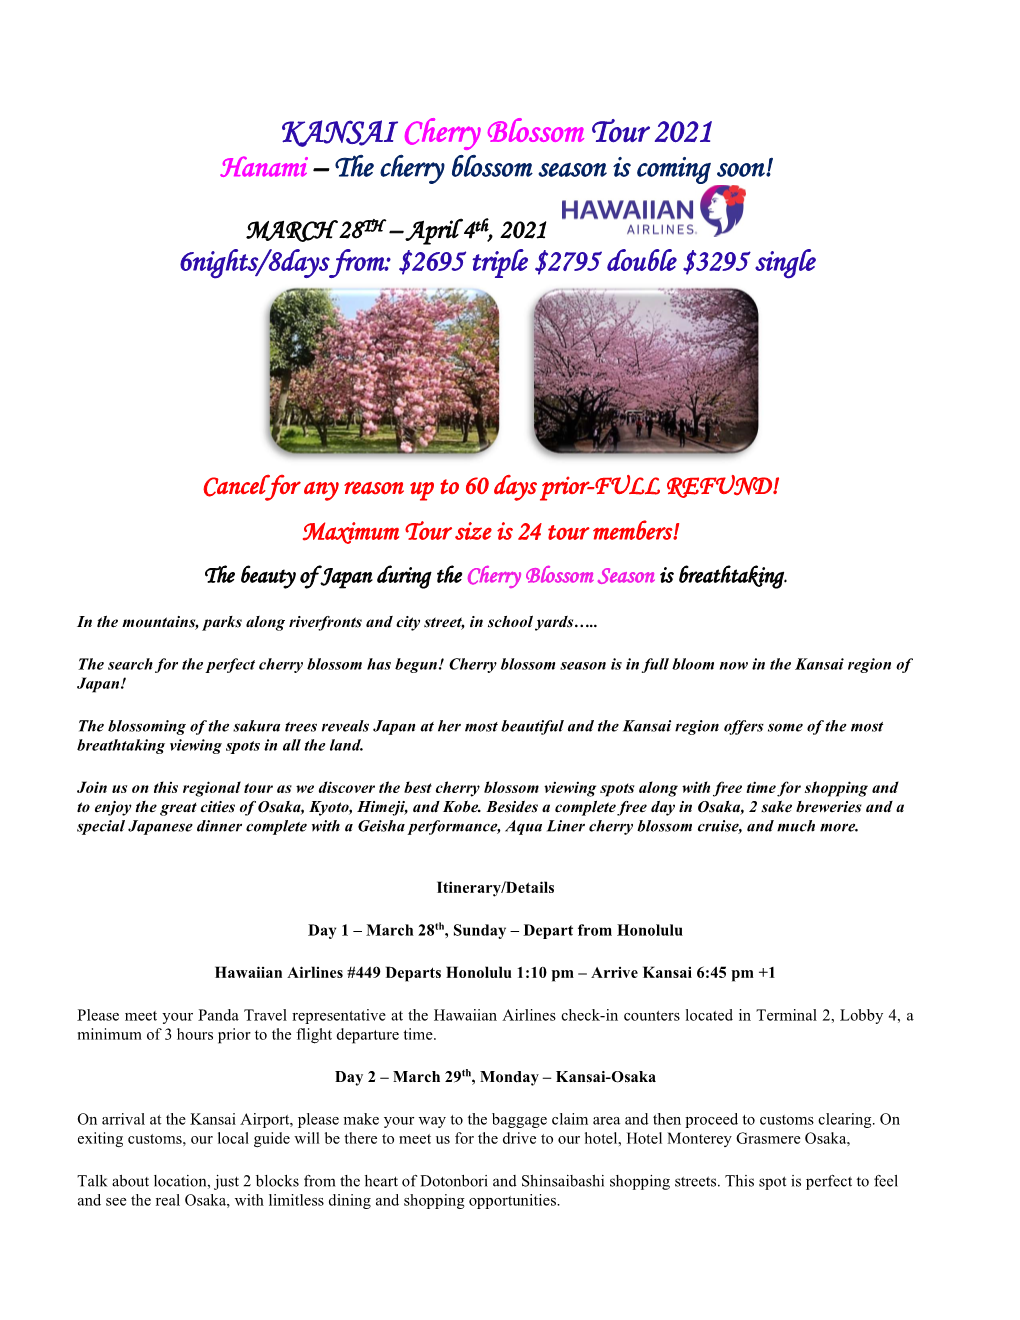 KANSAI Cherry Blossom Tour 2021 Hanami – the Cherry Blossom Season Is Coming Soon!